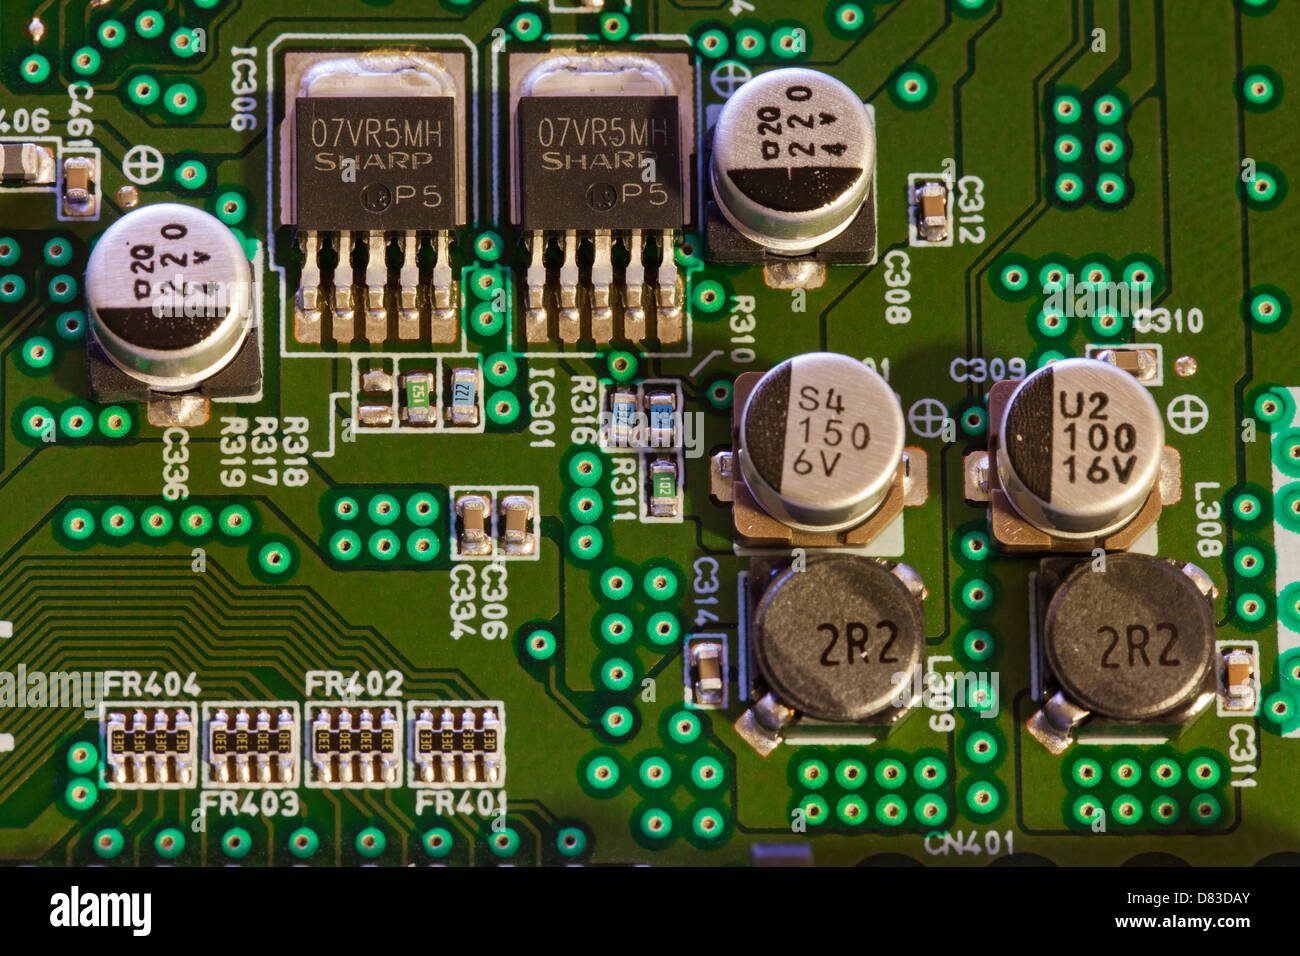 Capacitors and transistors on circuit board Stock Photo